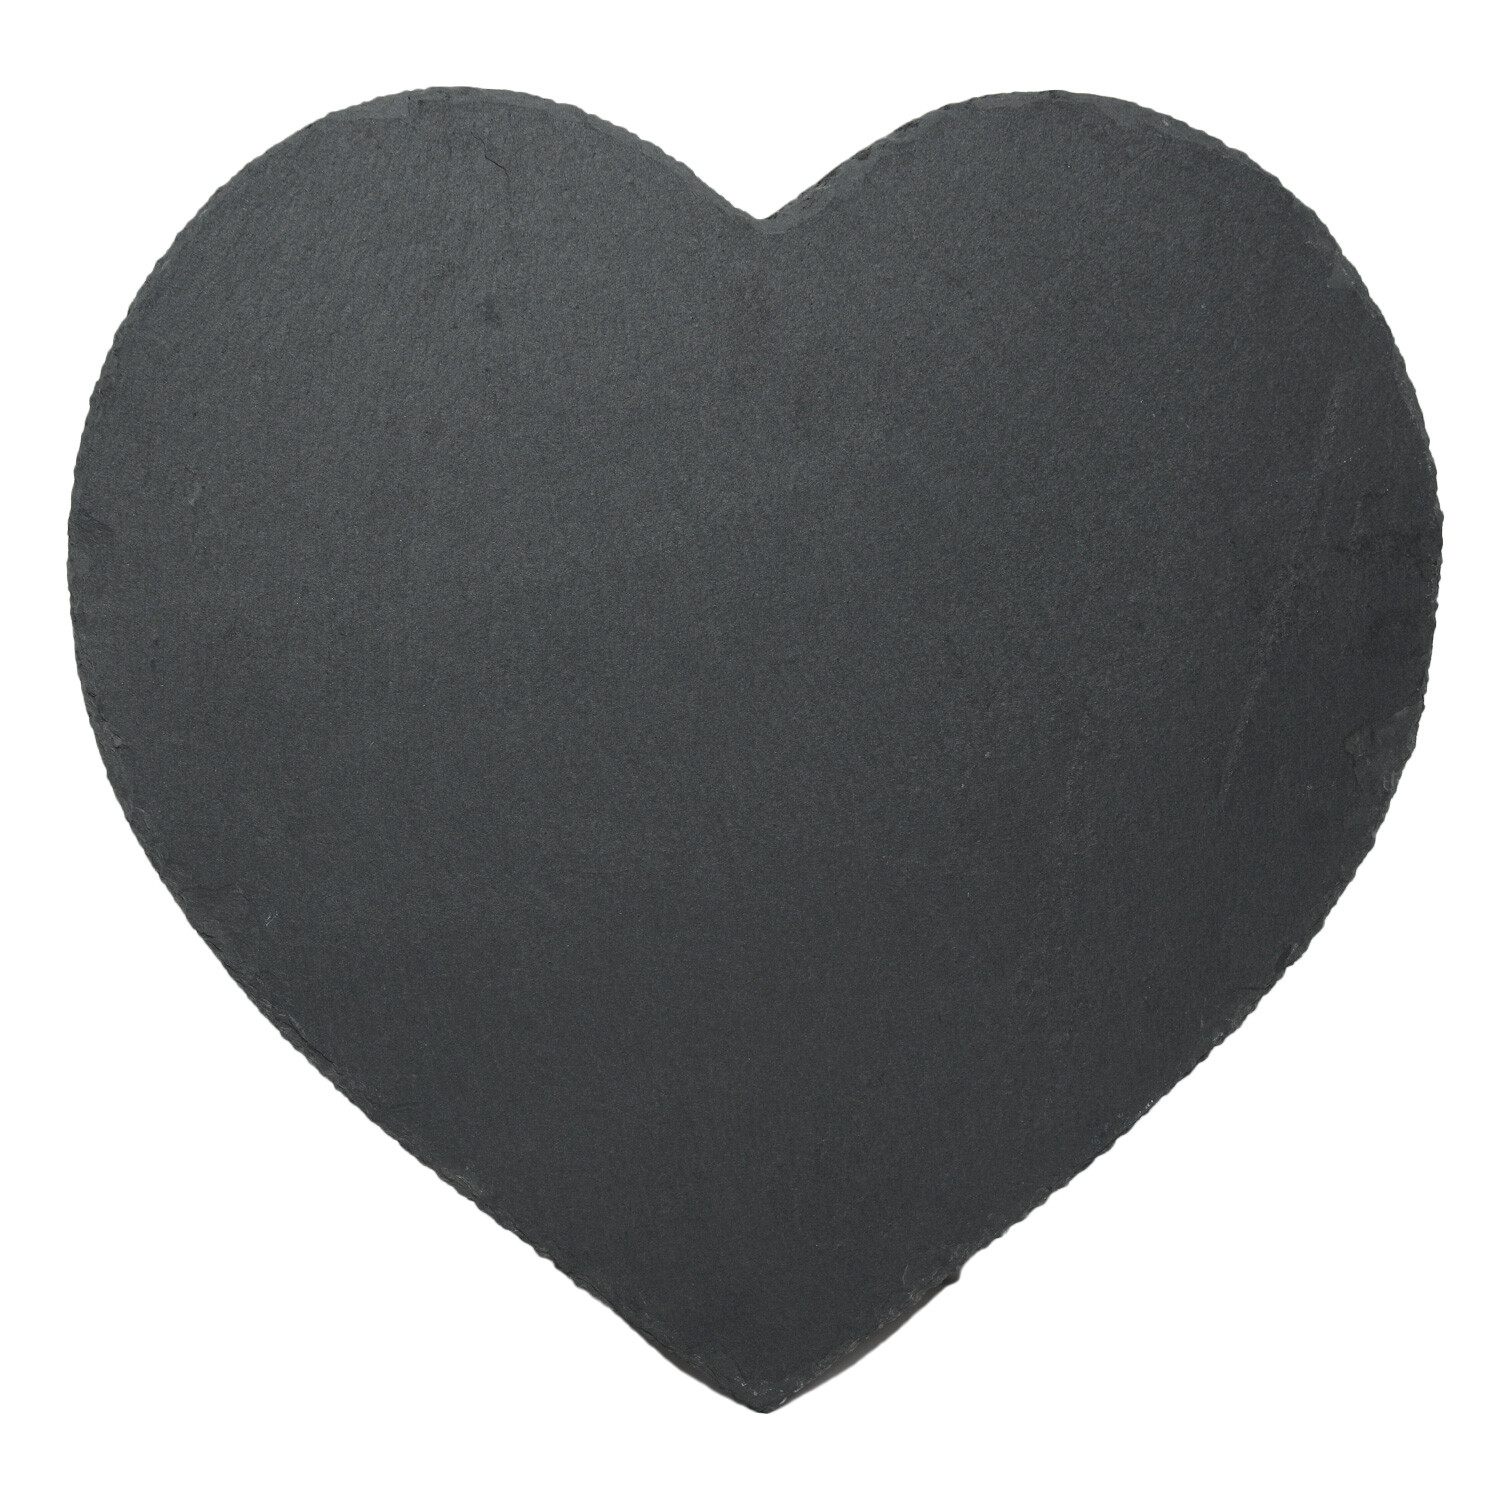 Heart Shaped Slate Serving Board - Black Image 2